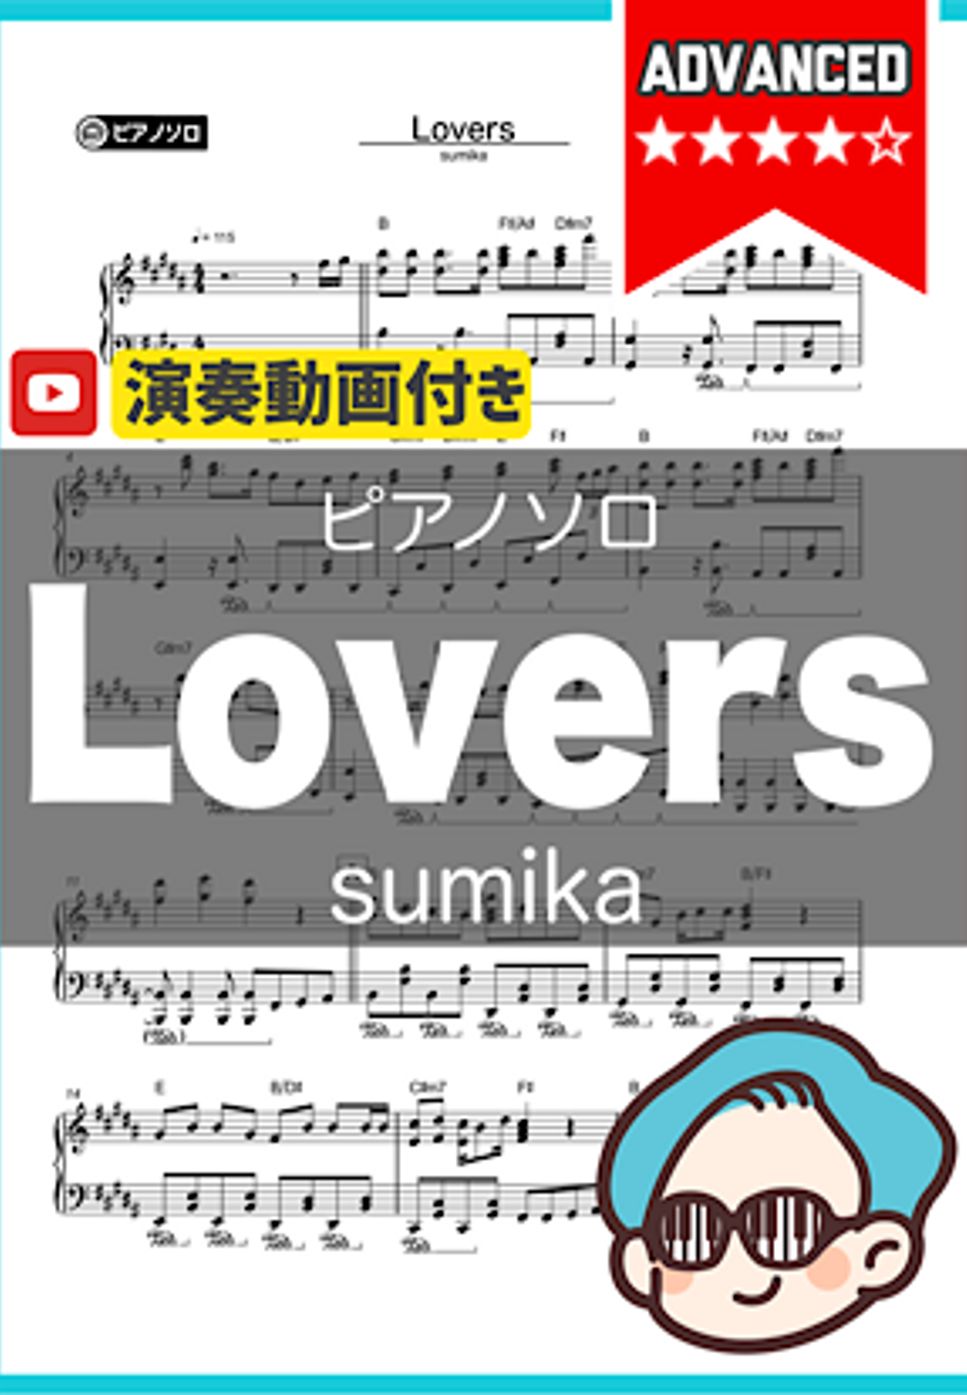 sumika - Lovers by THETA